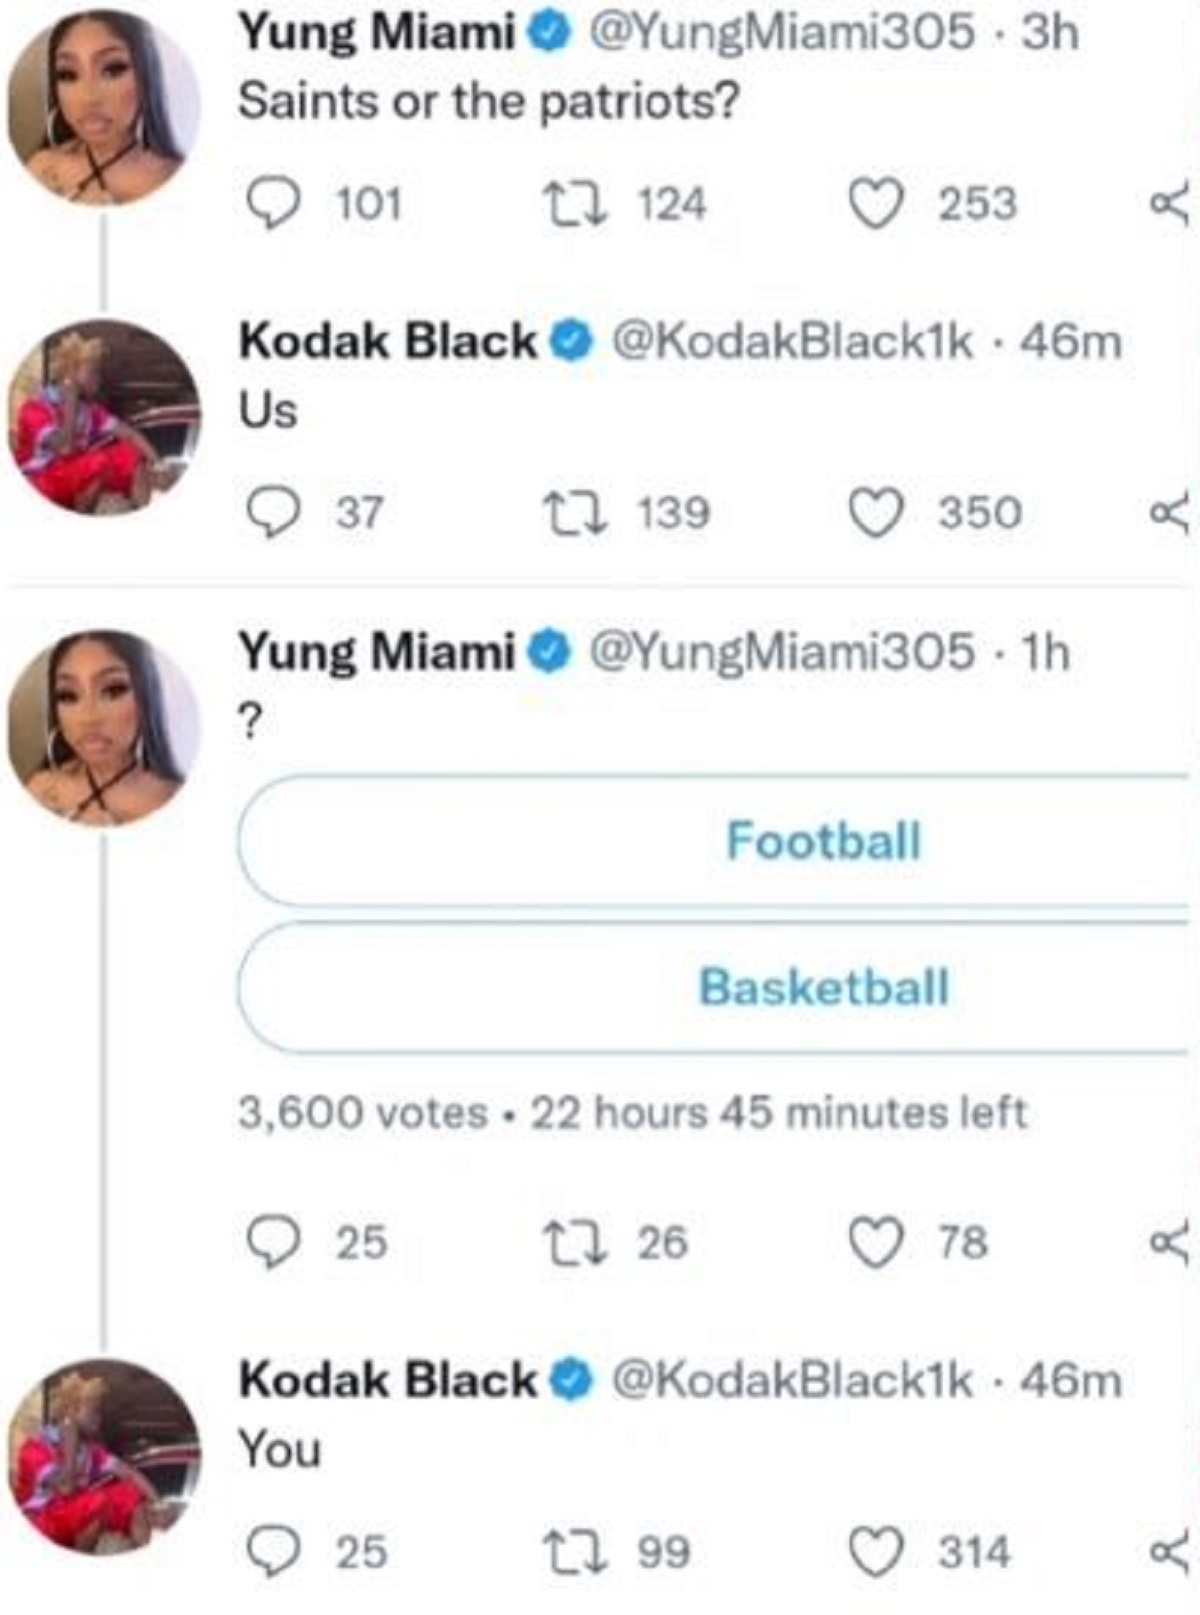 Kodak Black tells Yung Miami he wants her on Twitter